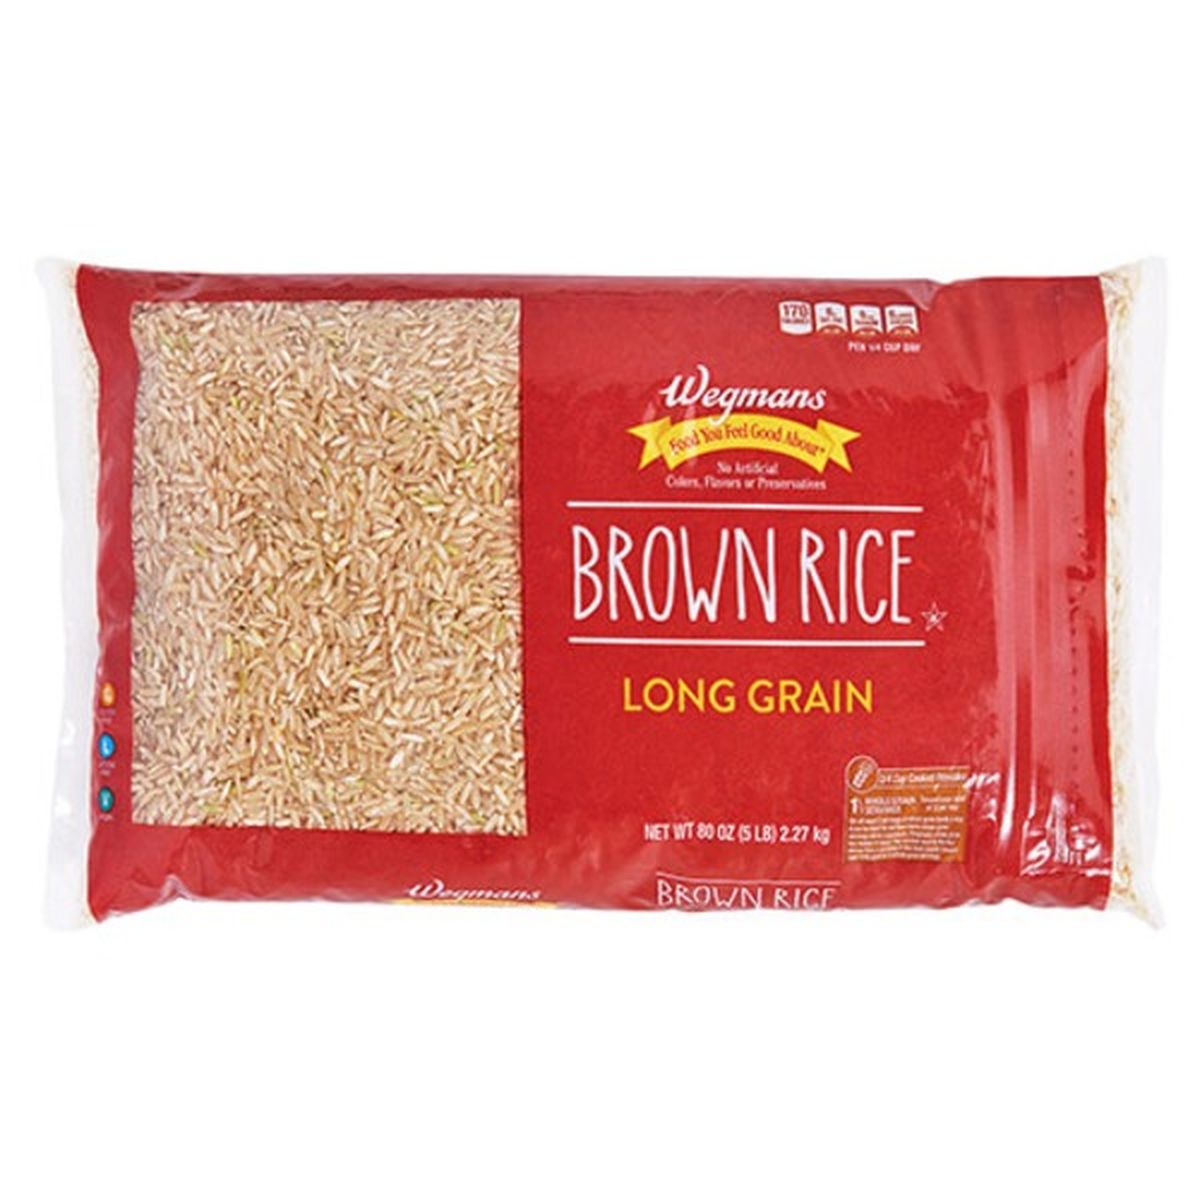 Calories in Wegmans Long Grain Brown Rice